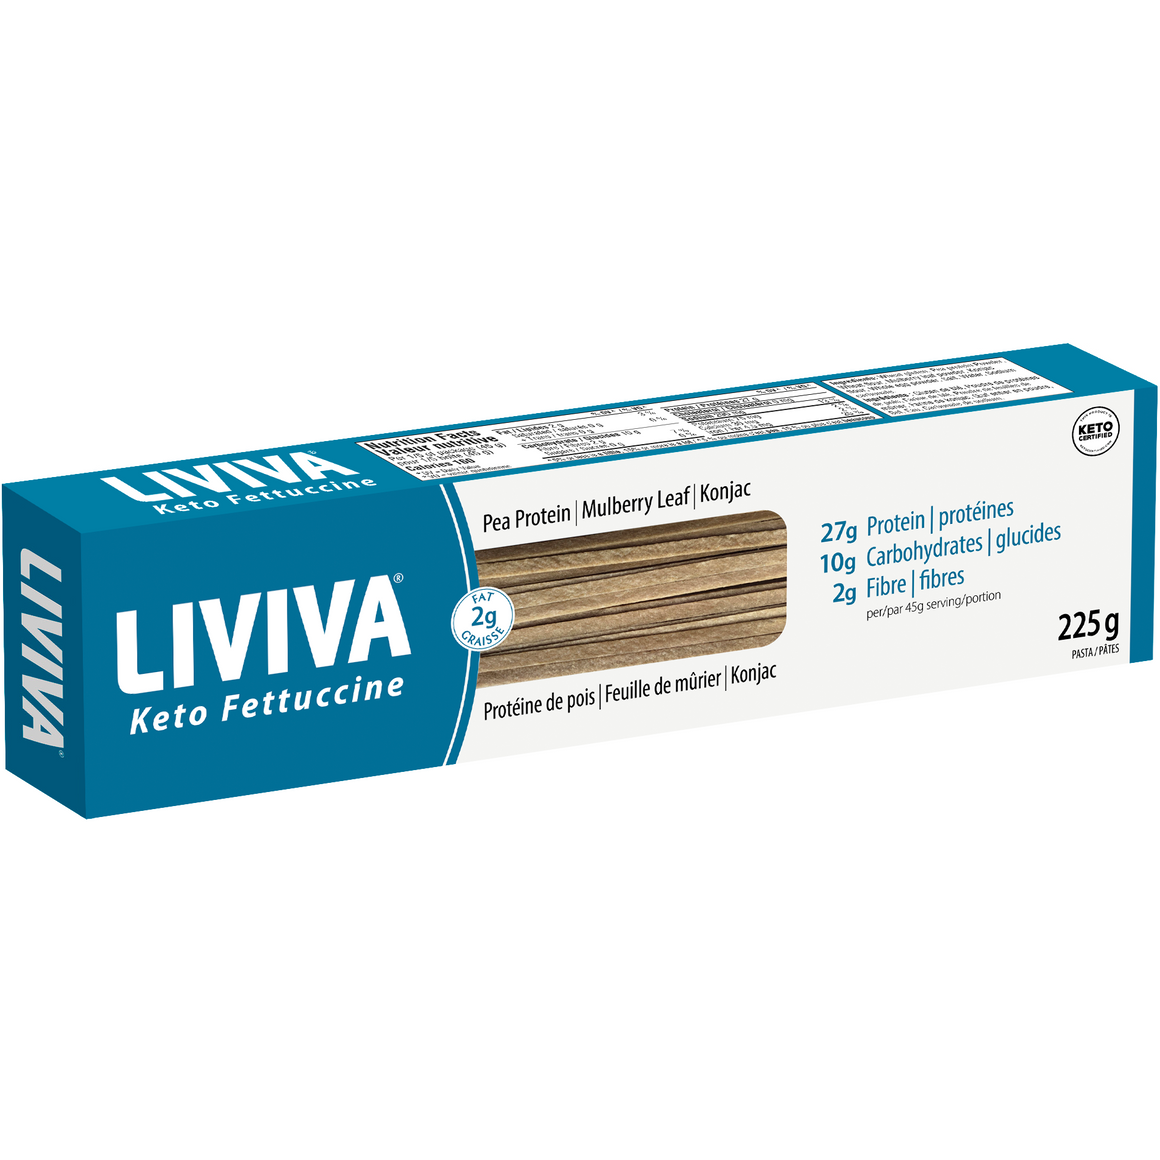 Liviva - Low Carb Keto Pasta - Fettuccine